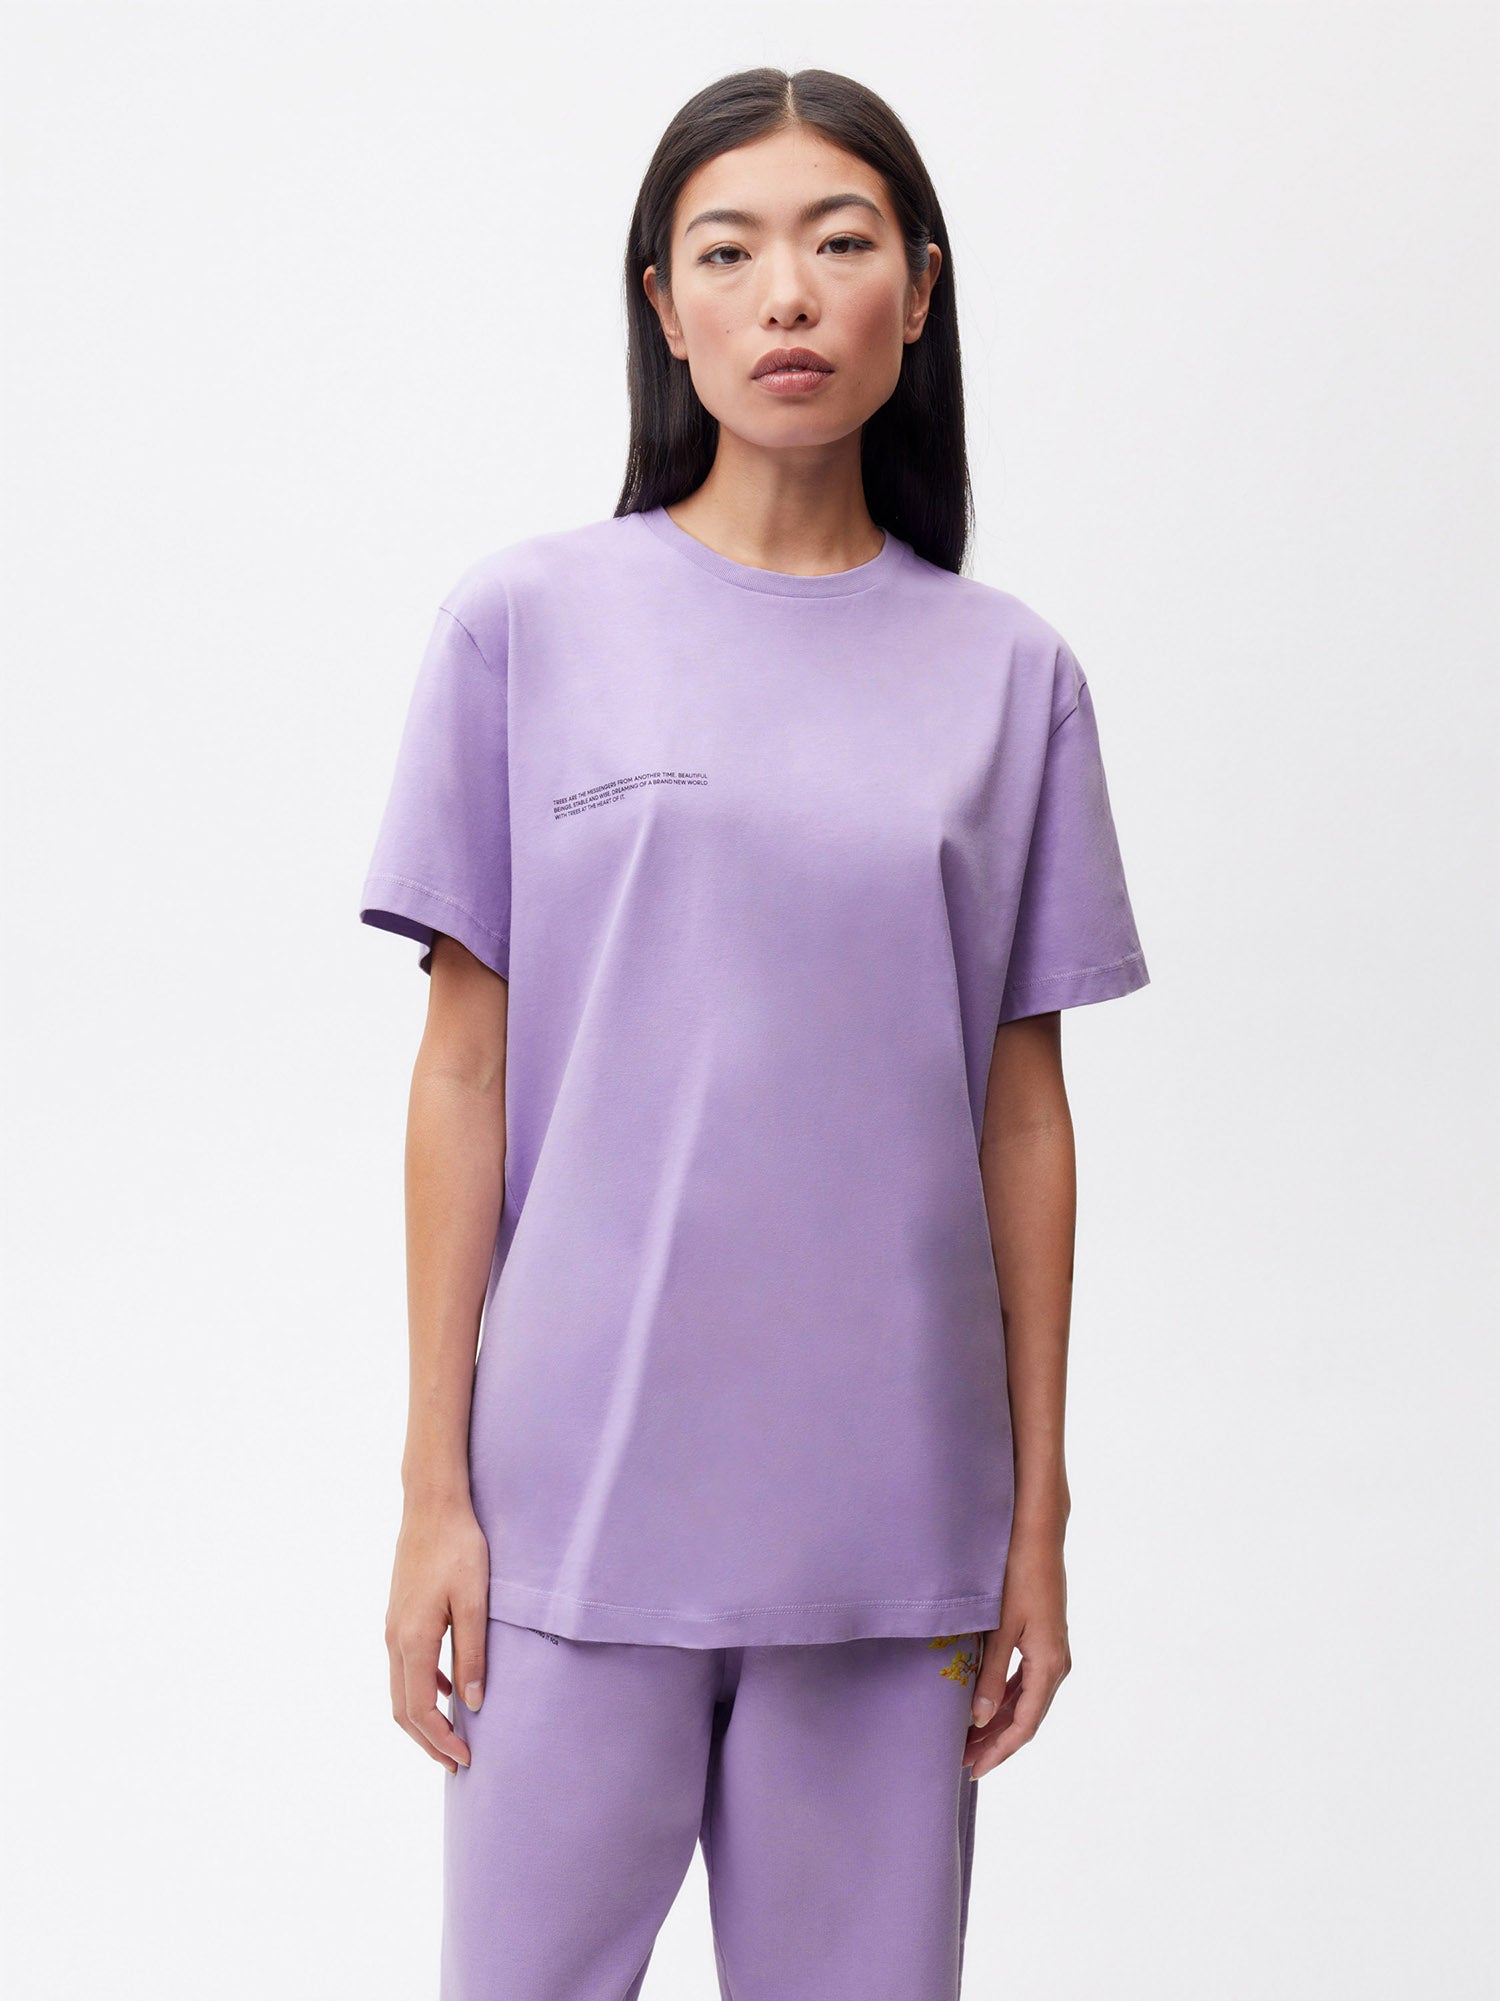 Pangaia-Kenny-Scharf-Organic-Cotton-T-Shirt-Paradis-Perdu-Orchid-Purple-Female-1